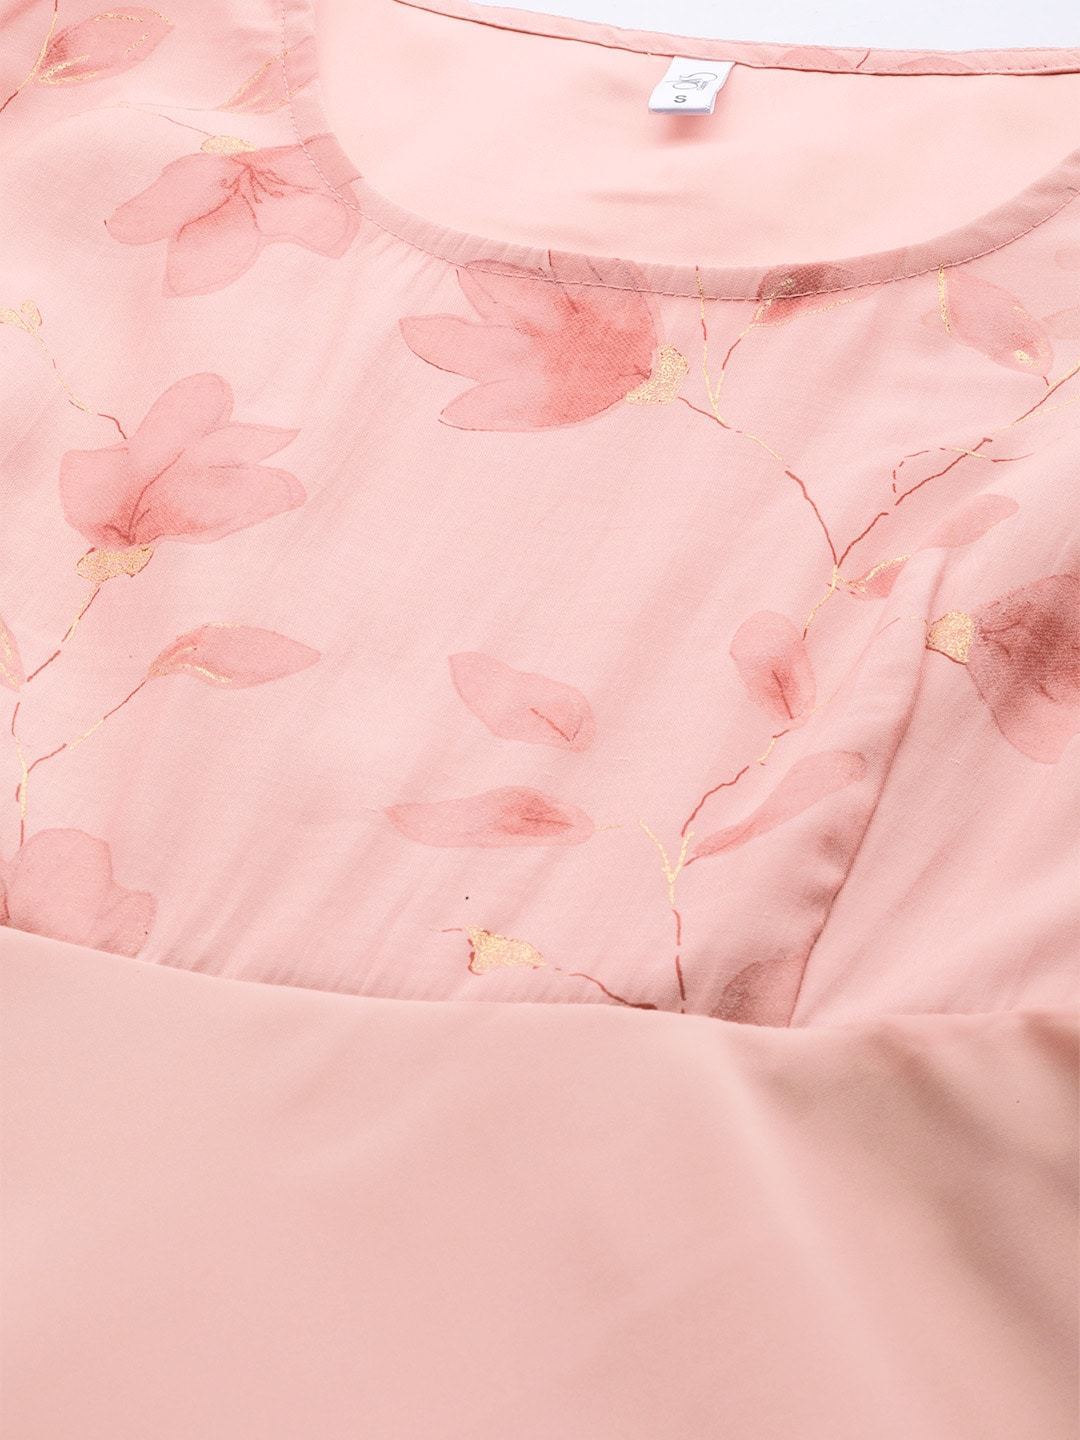 Women's  Pink Printed Detail Satin Finish Empire Maxi Dress - AKS